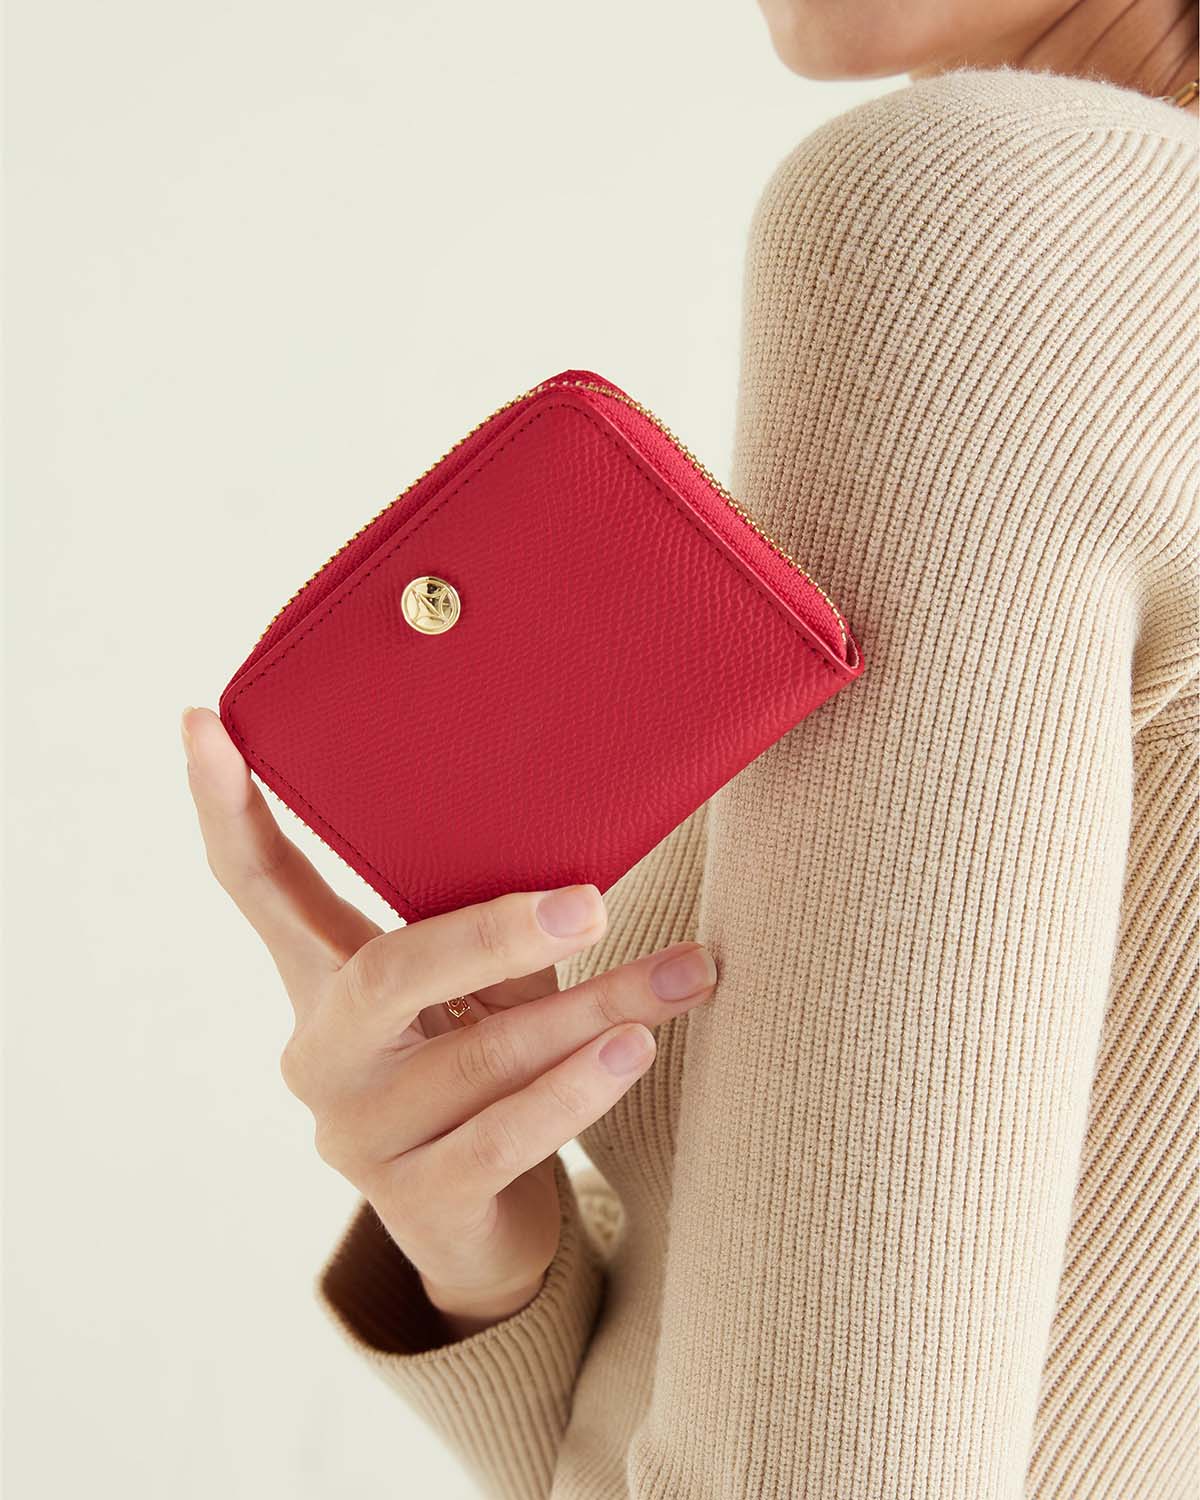 VERA Emily Zipped Wallet in Passionate Red กระเป๋าสตางค์หนังแท้ ทรงสั้น ซิปรอบ สีแดง